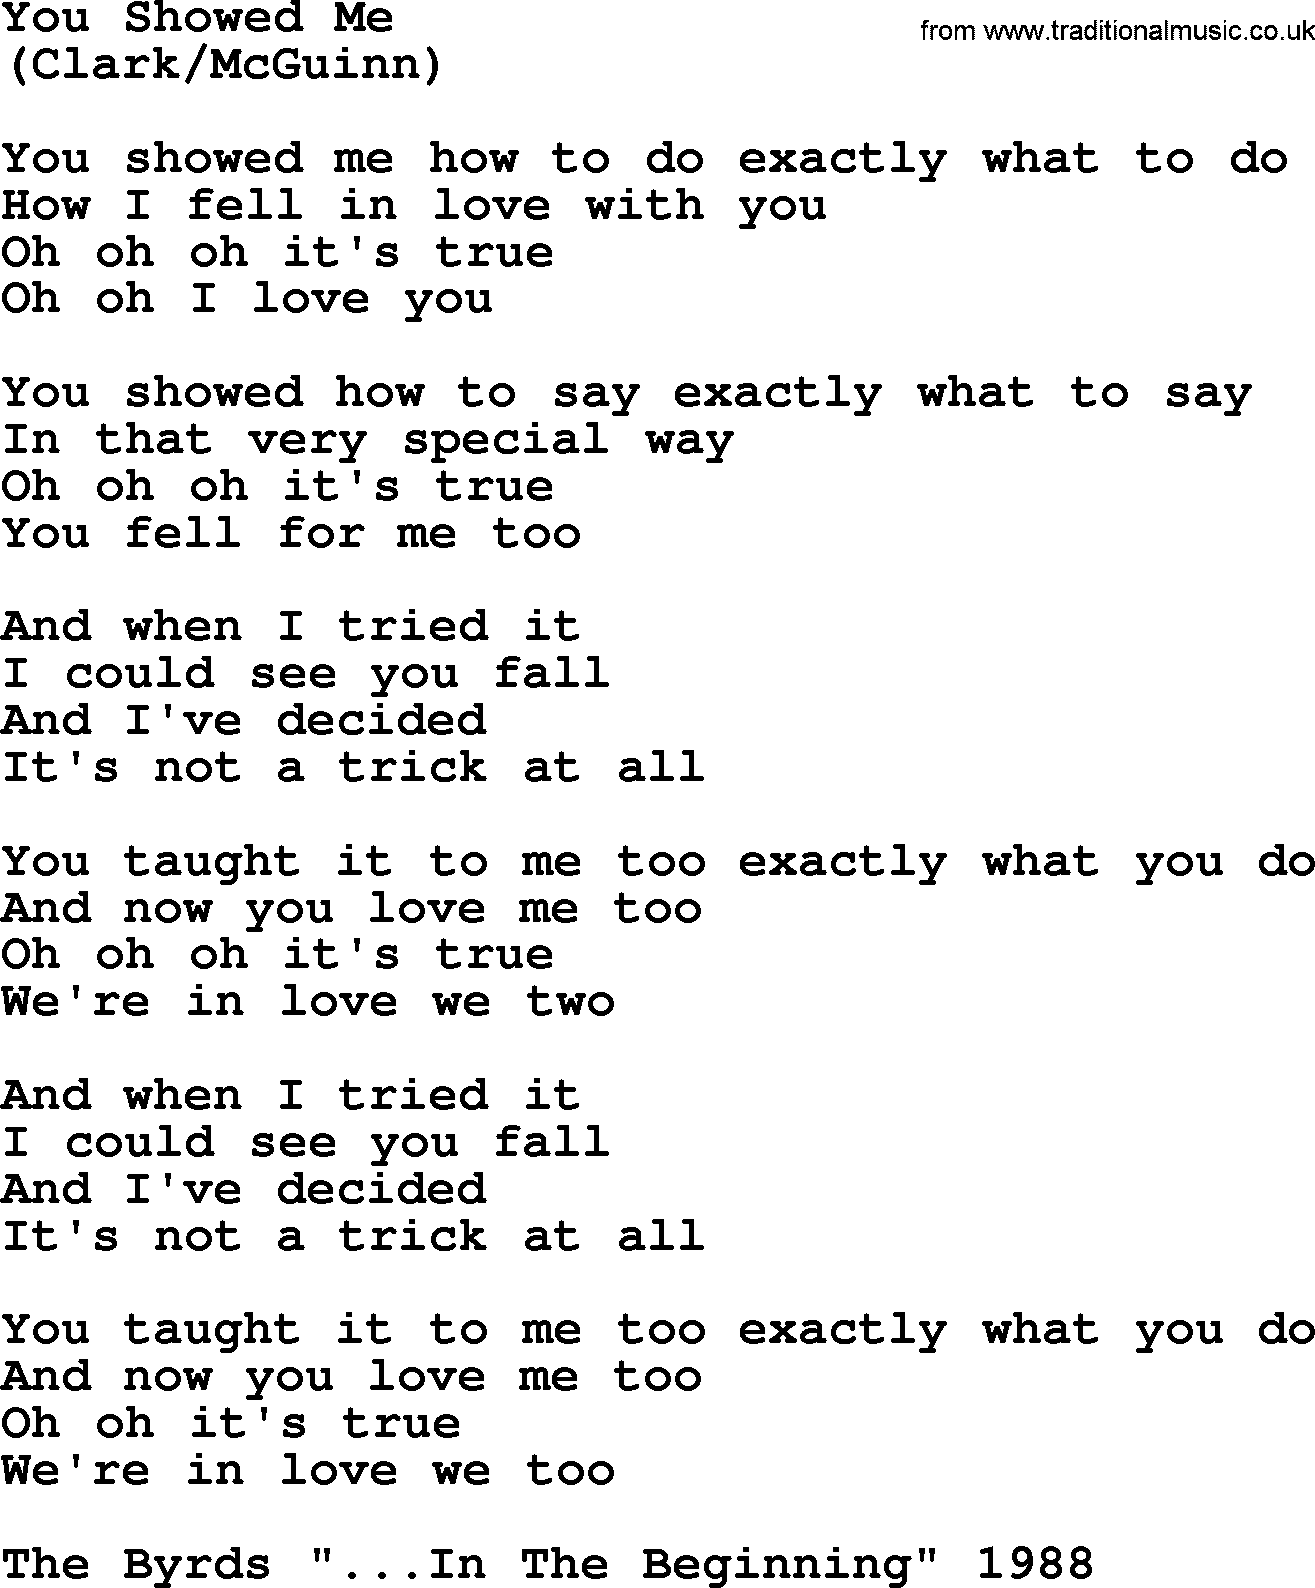 The Byrds song You Showed Me, lyrics